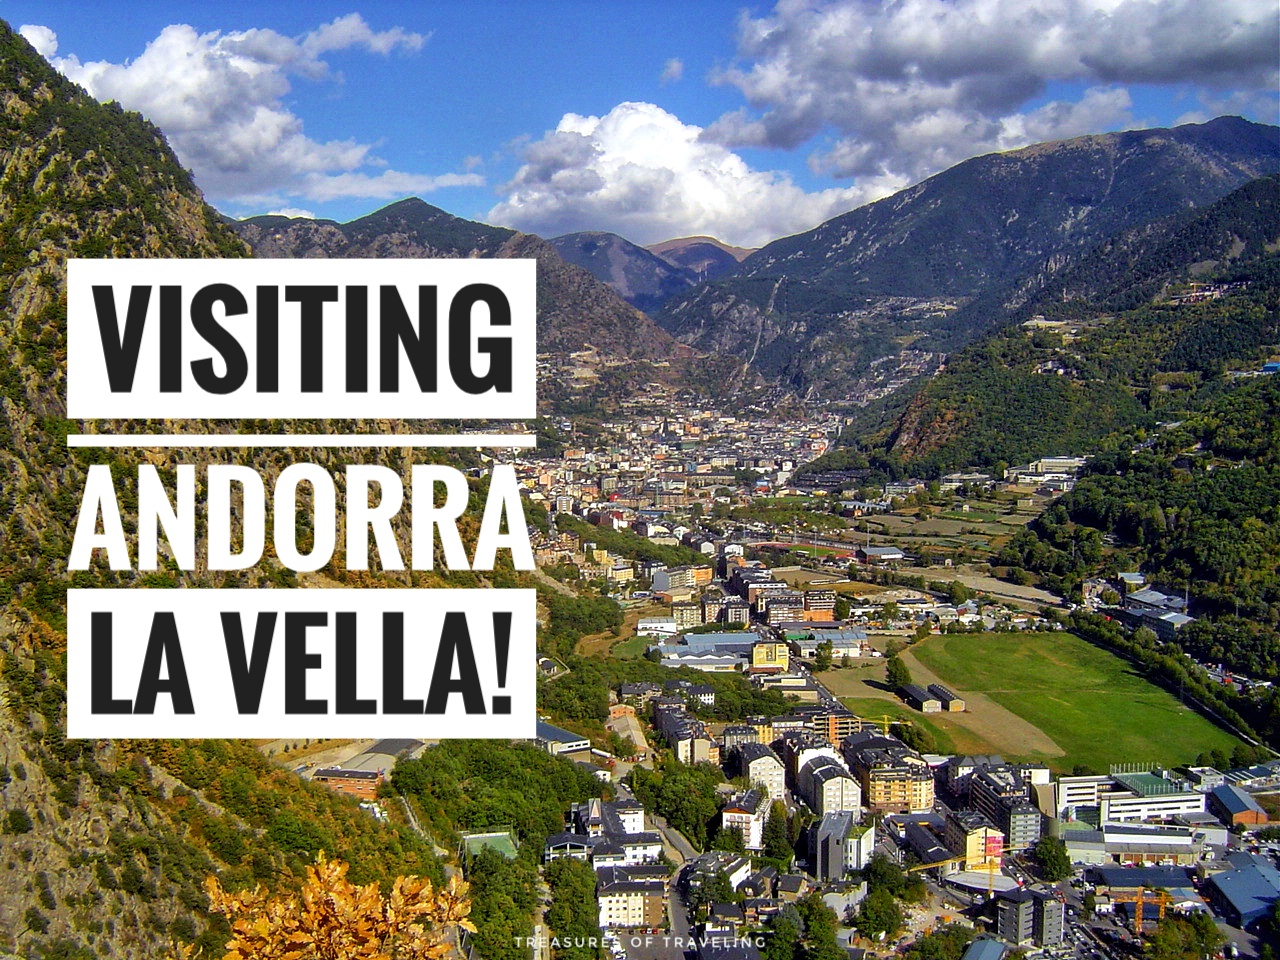 Visiting Andorra la Vella!